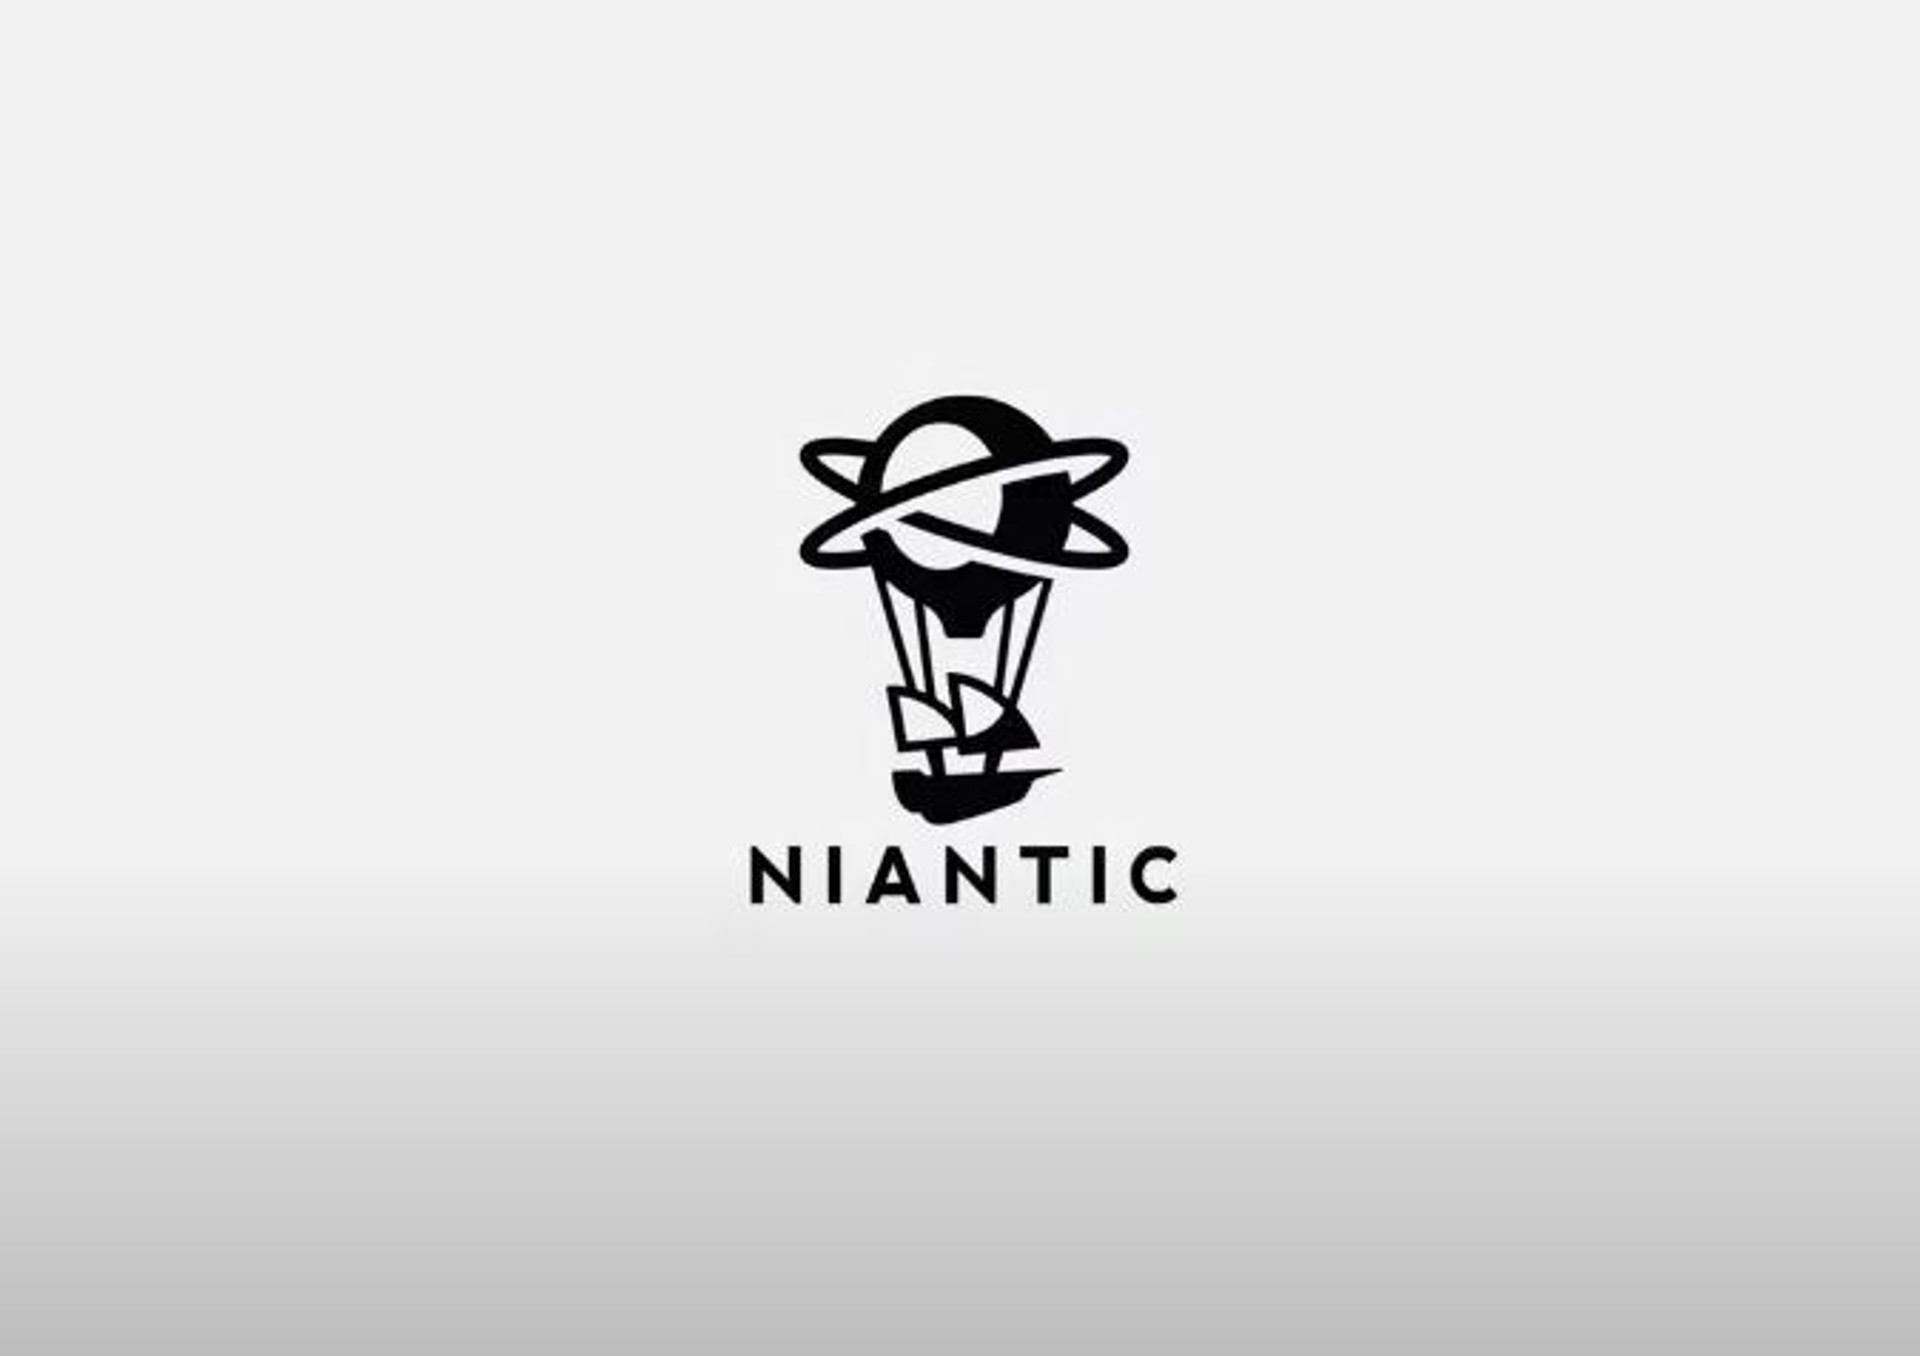 Niantic กำลังมีปัญหาทางเศรษฐกิจ ยุติให้บริการหลายเกมรวมถึงปลดพนักงาน